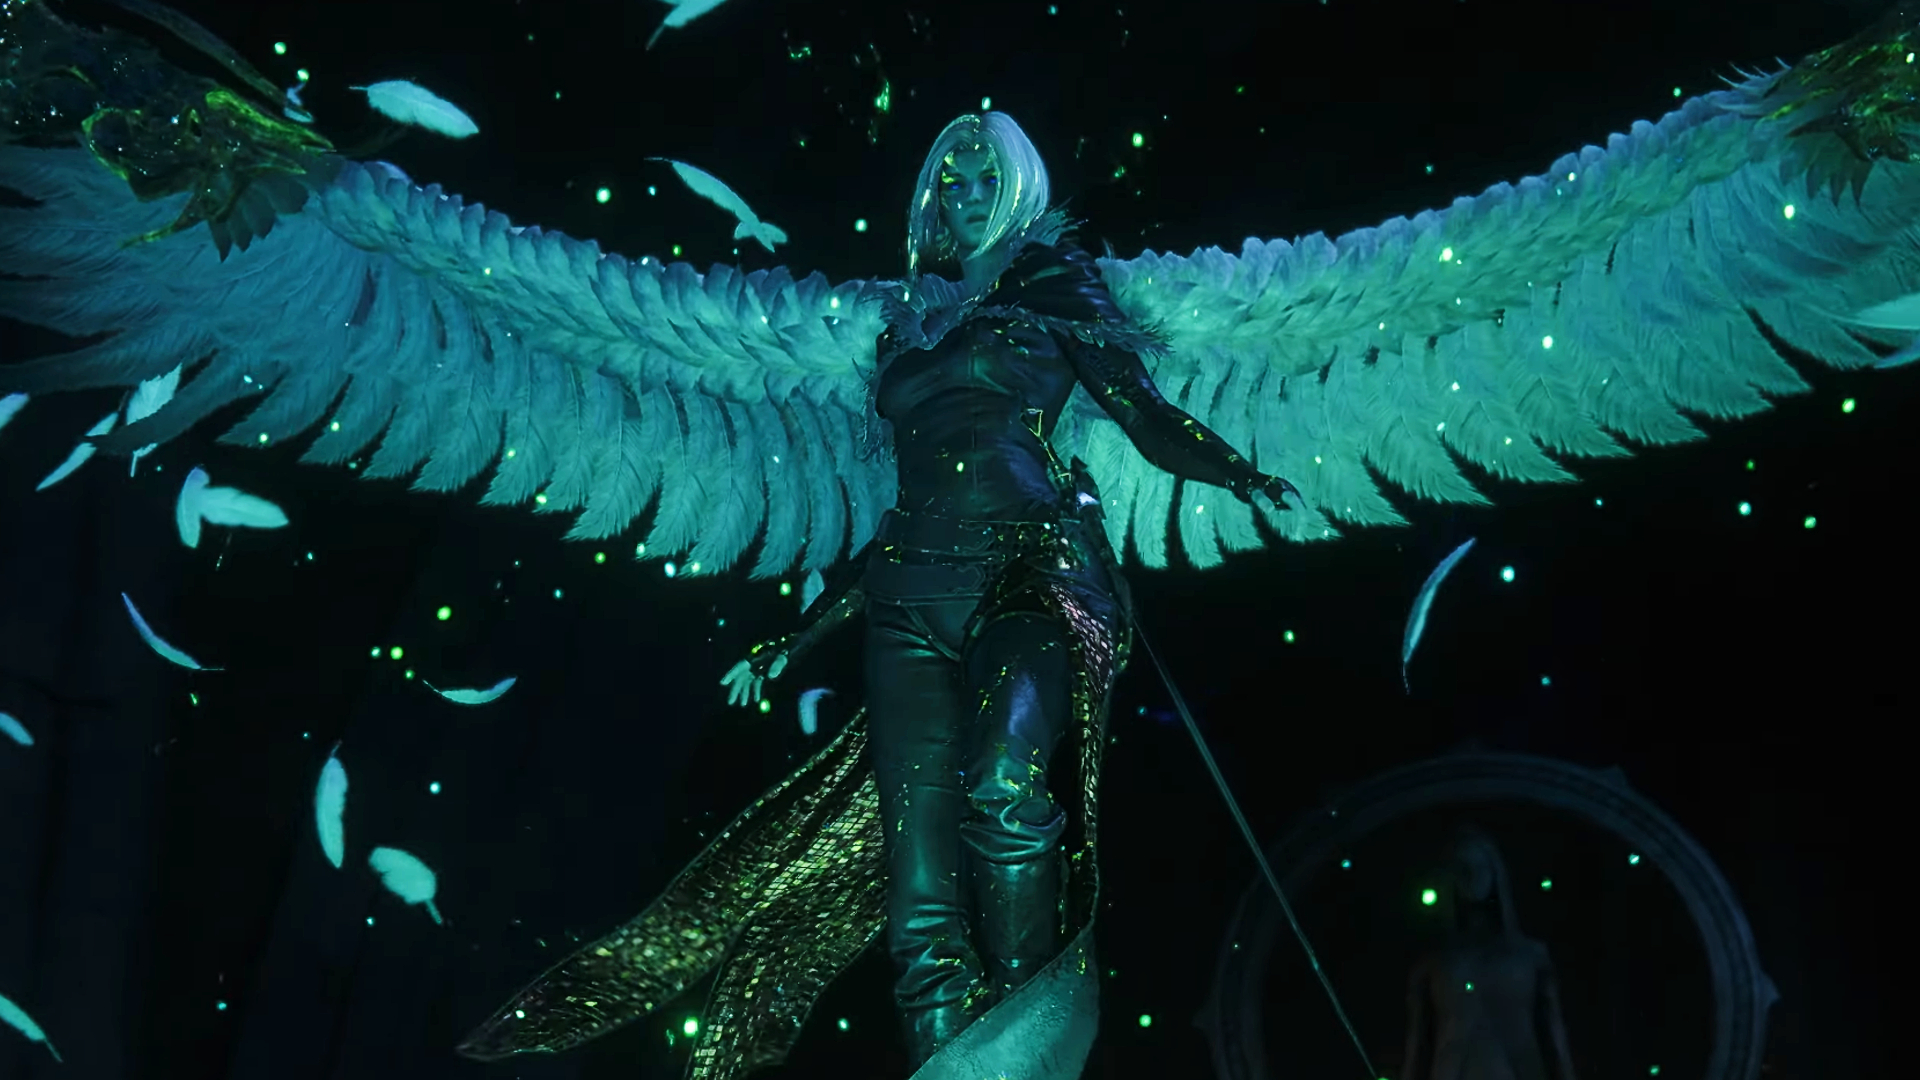 Benedikta sprouting Garuda's wings.